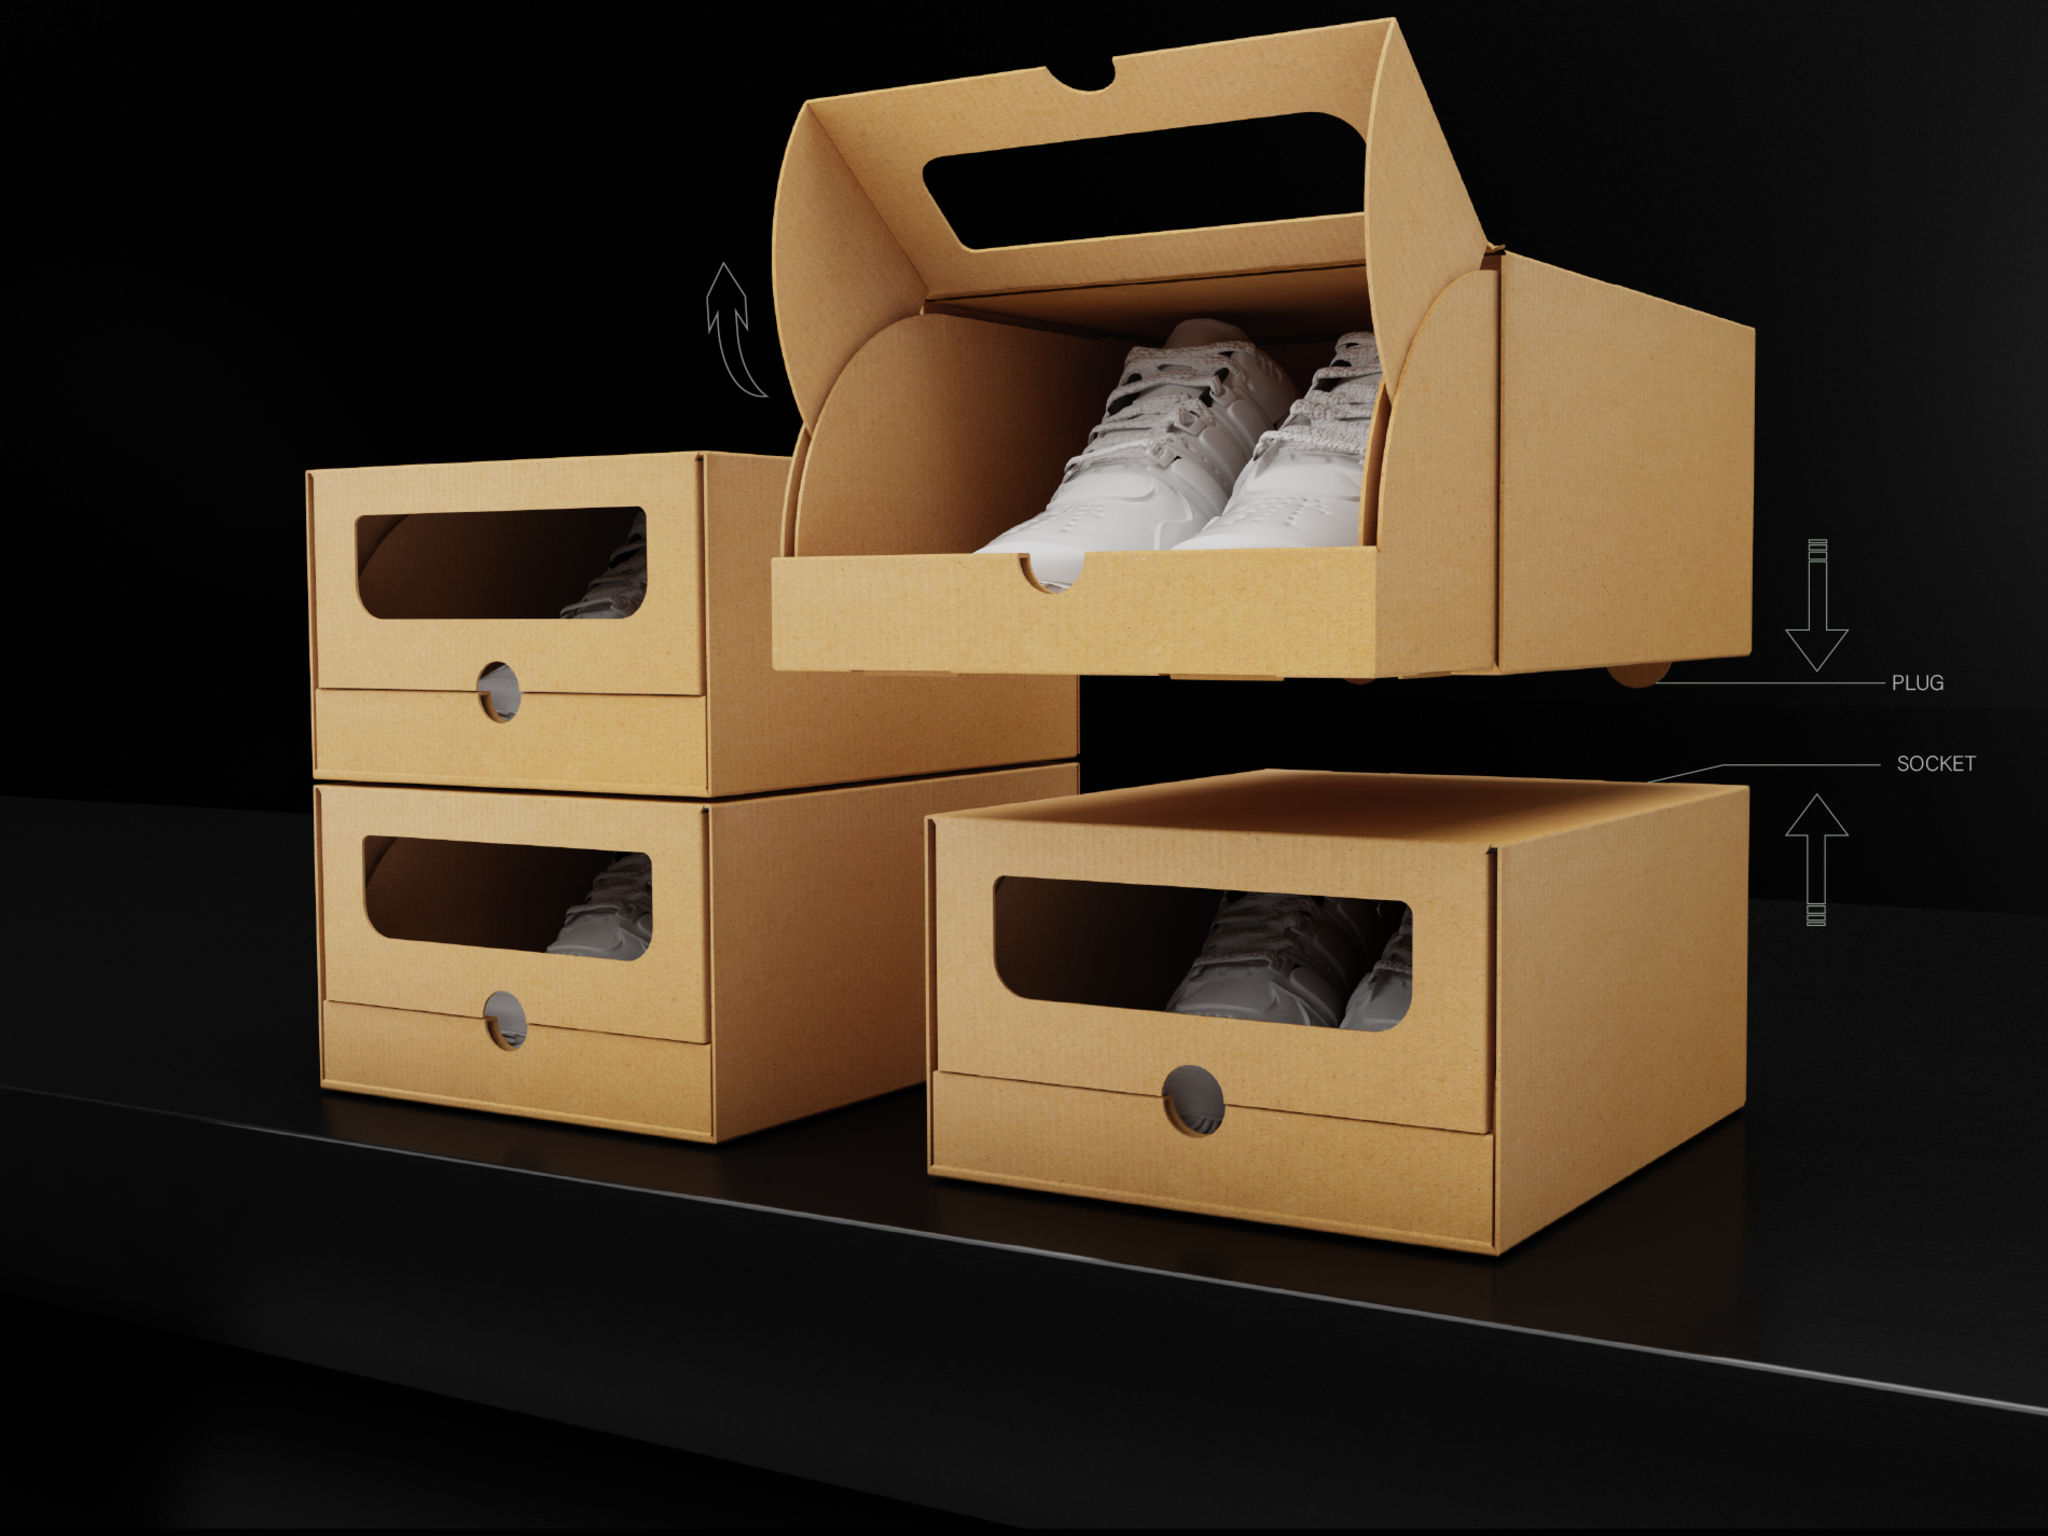 iF Design - Shoe box design with creative storage